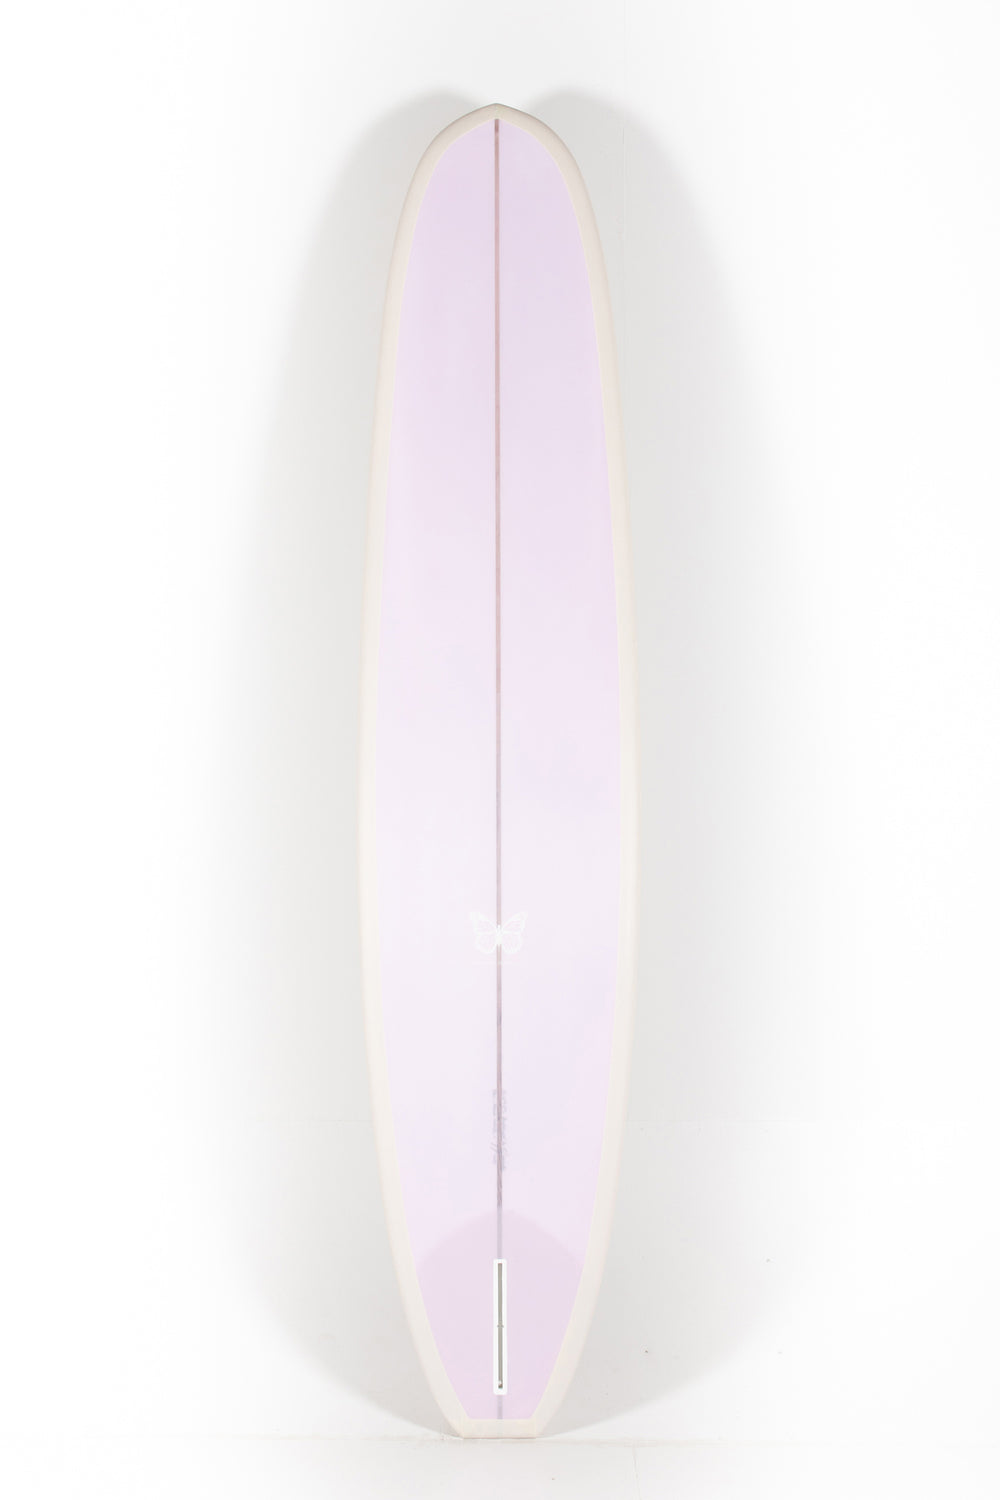 Pukas Surf Shop - Garmendia Surfboards - BULLET - 9’2” x 22 7/8 x 2 7/8 - Ref.GARMENBULLET9.2